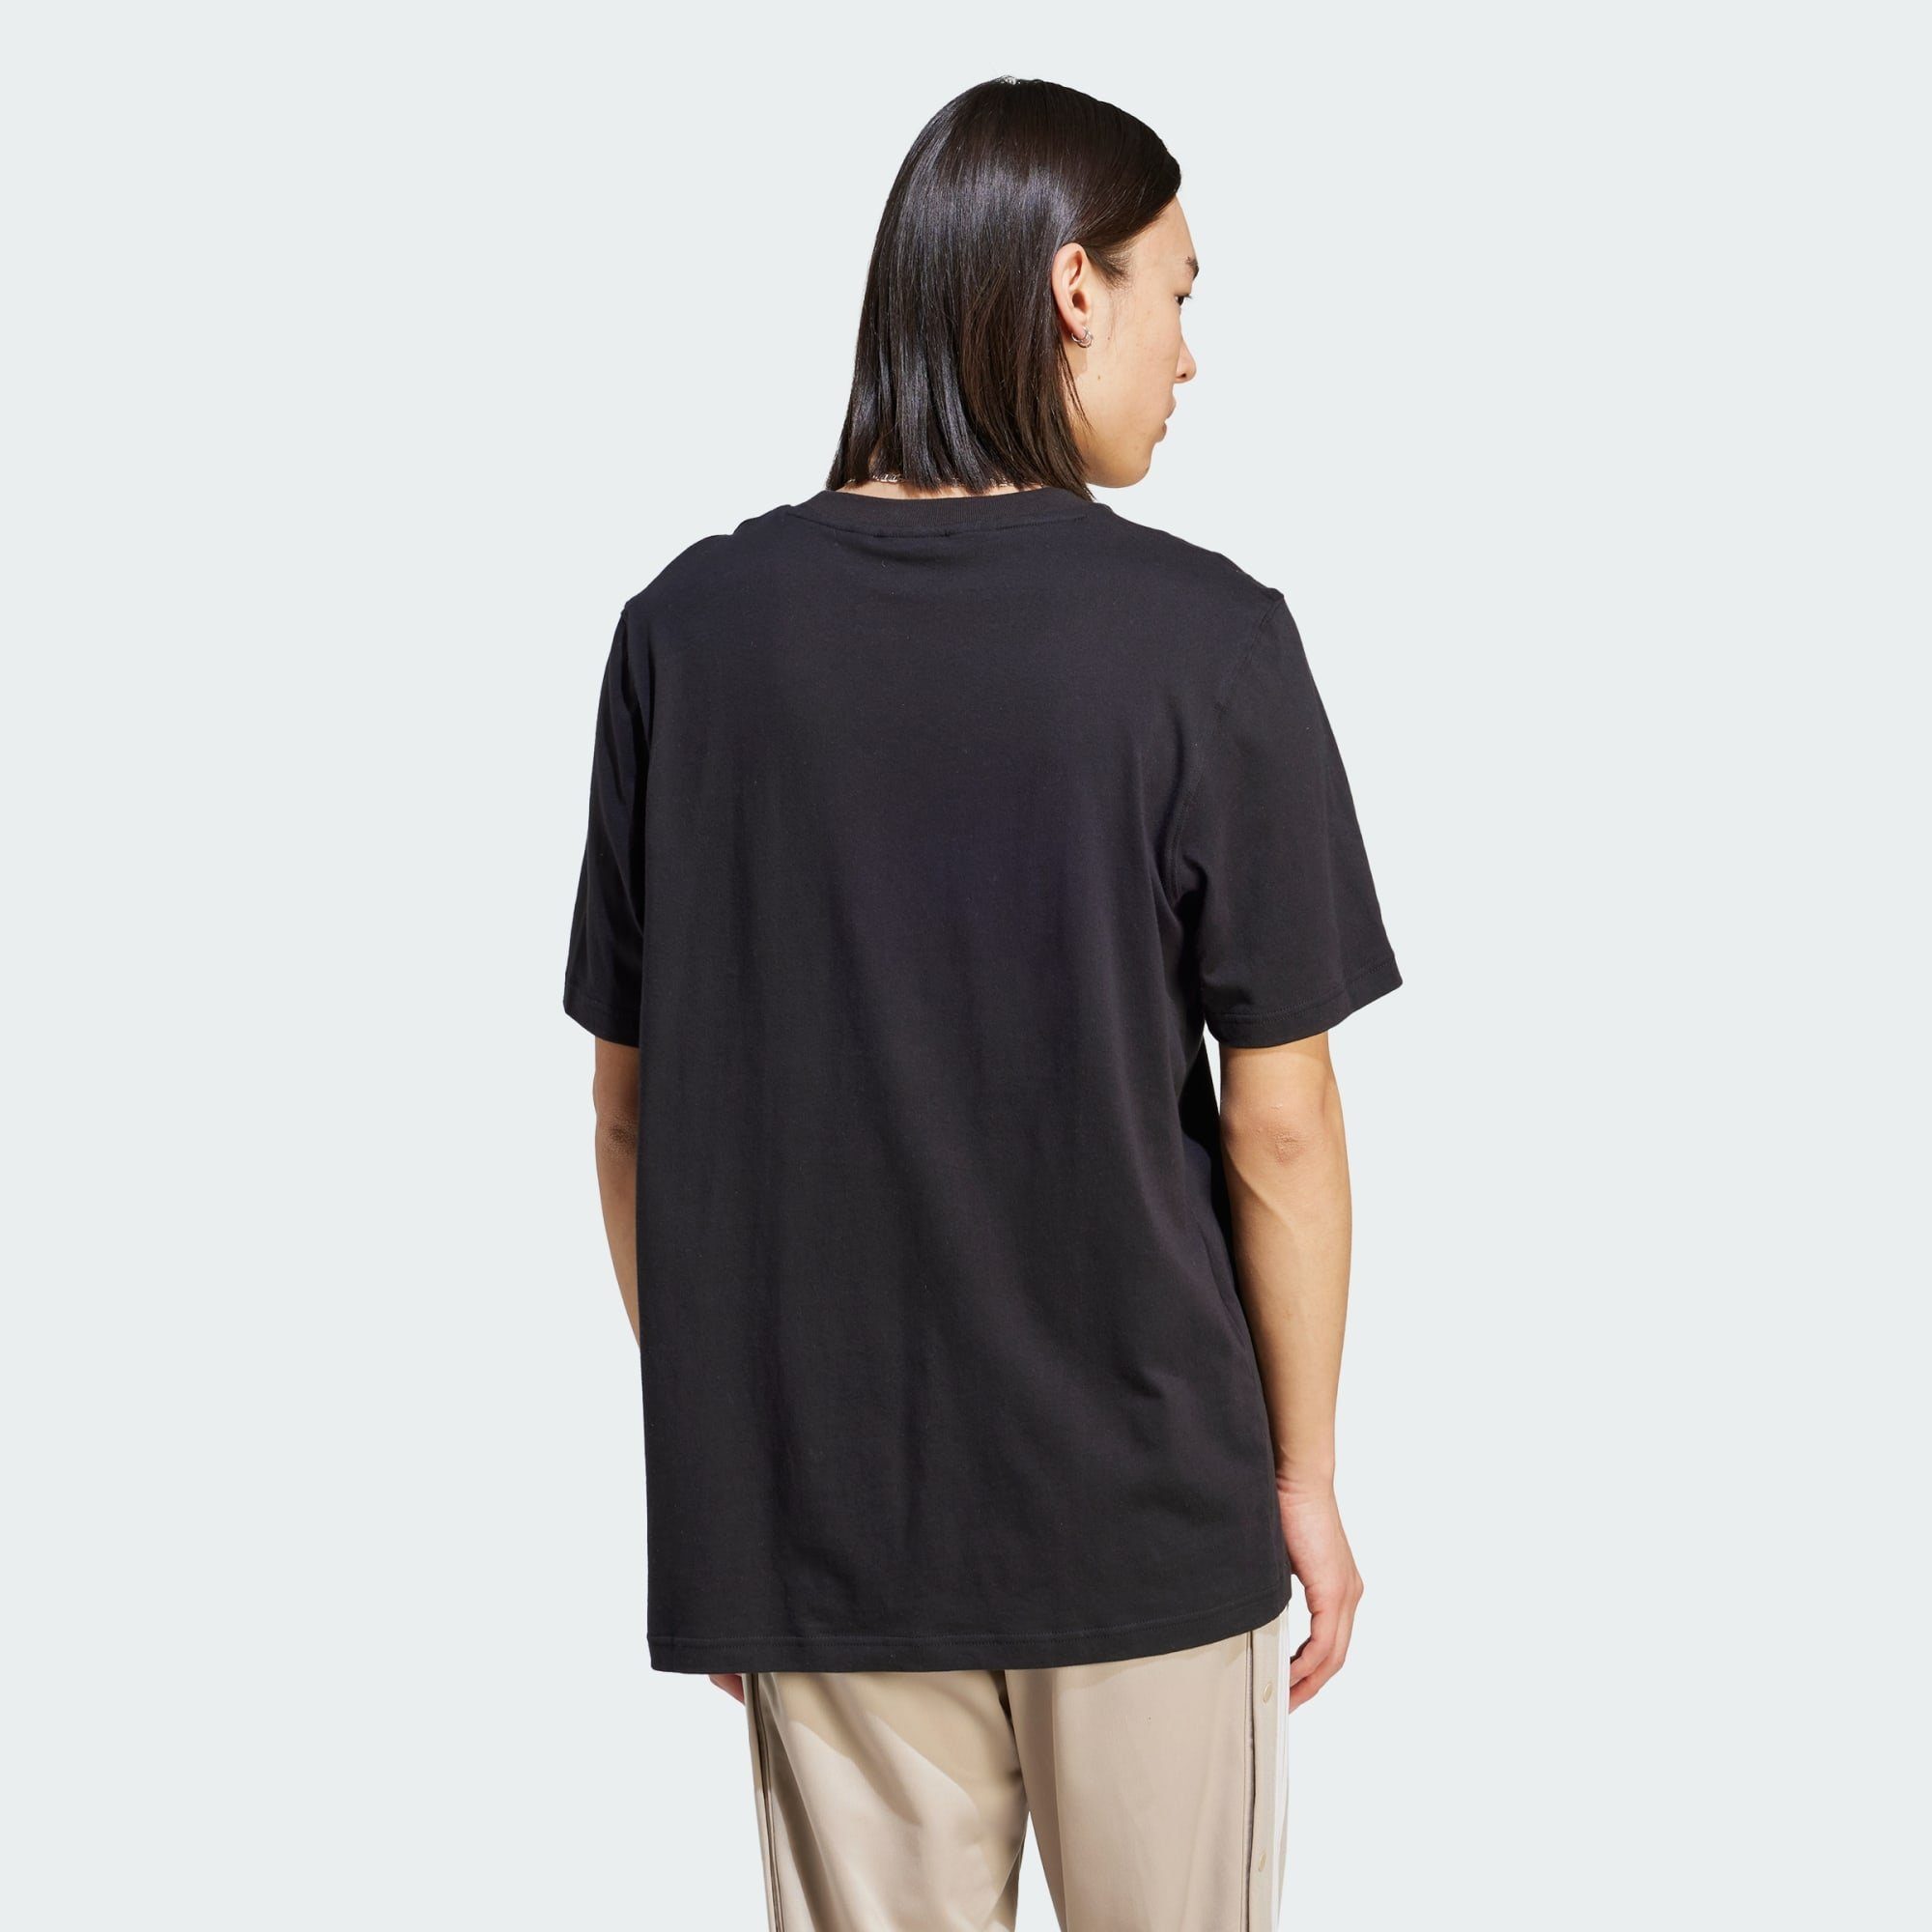 T-SHIRT Originals TREFOIL / White Black ESSENTIALS T-Shirt adidas